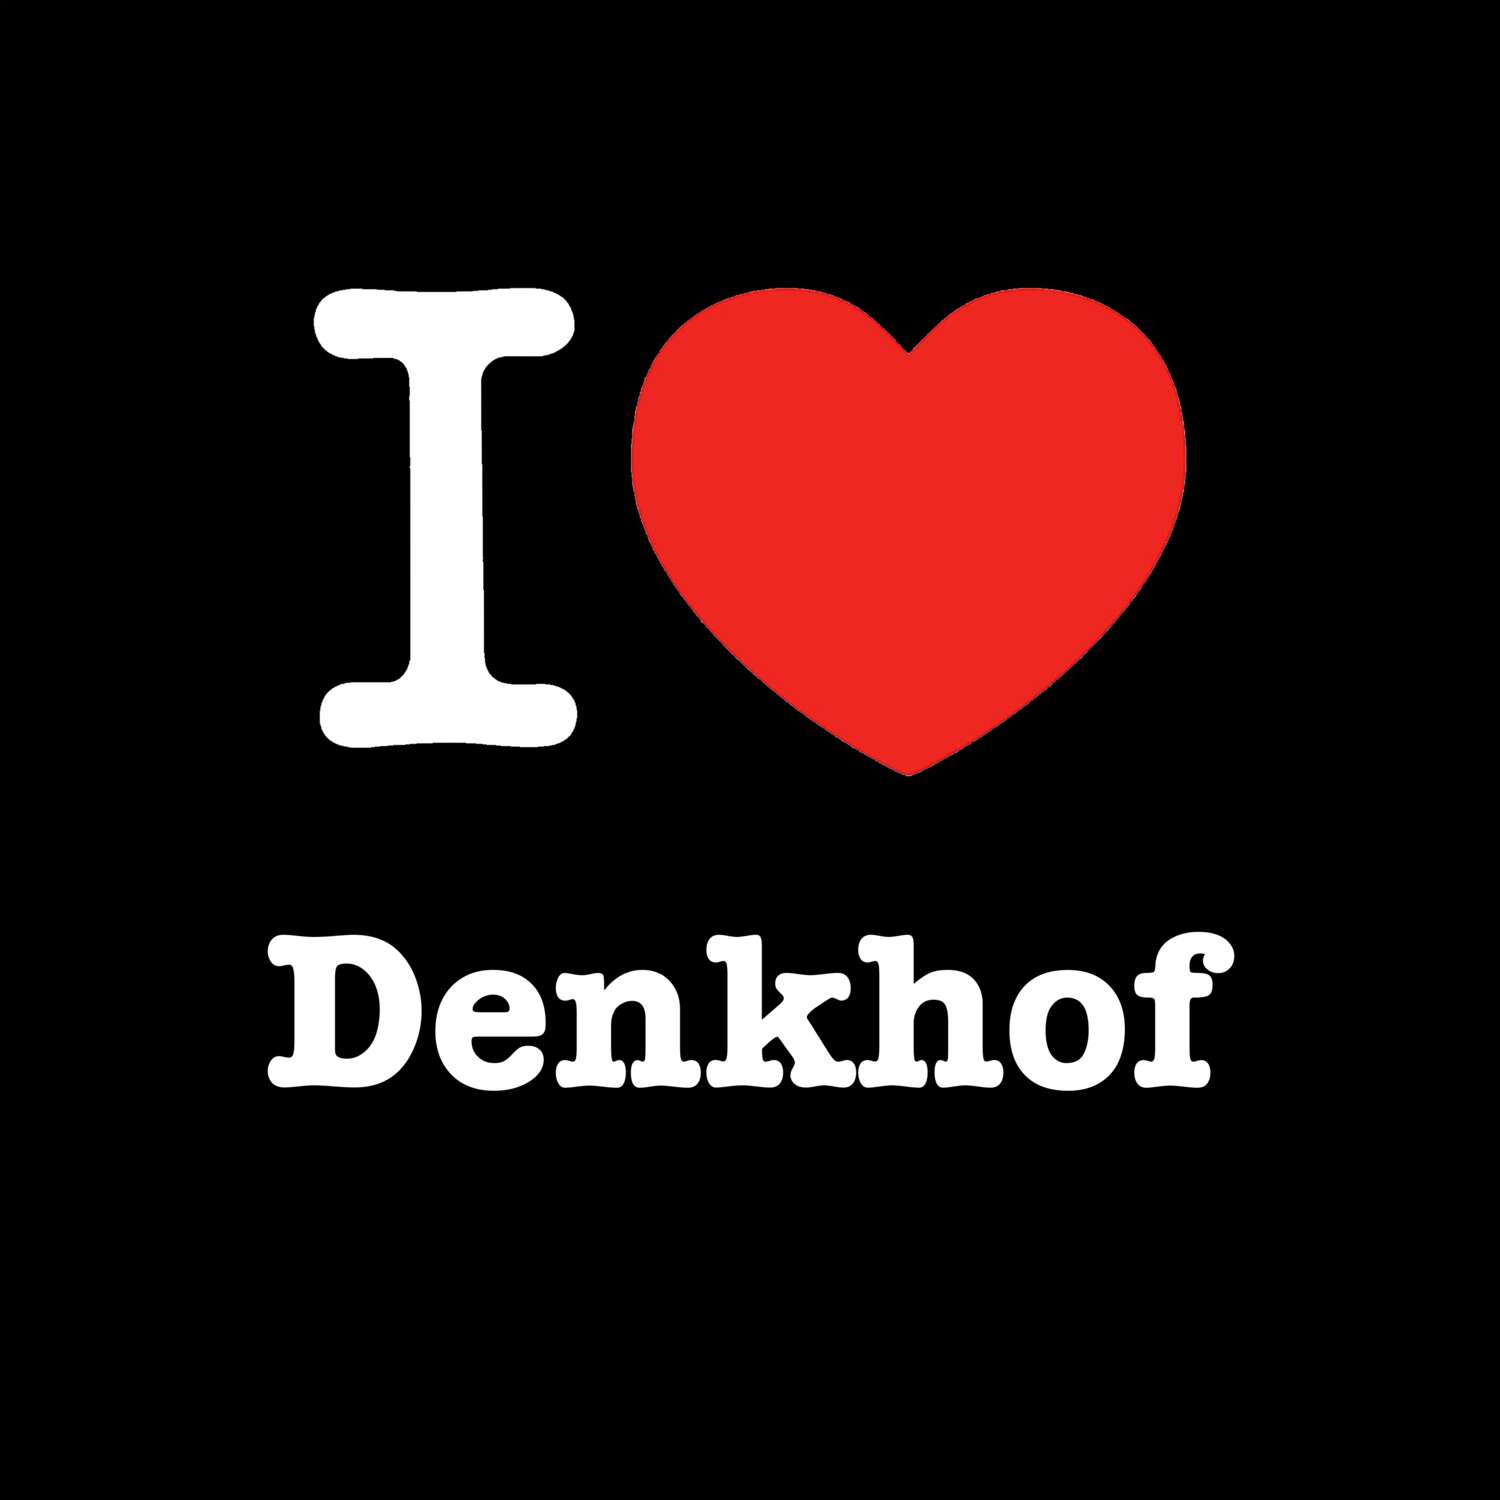 Denkhof T-Shirt »I love«